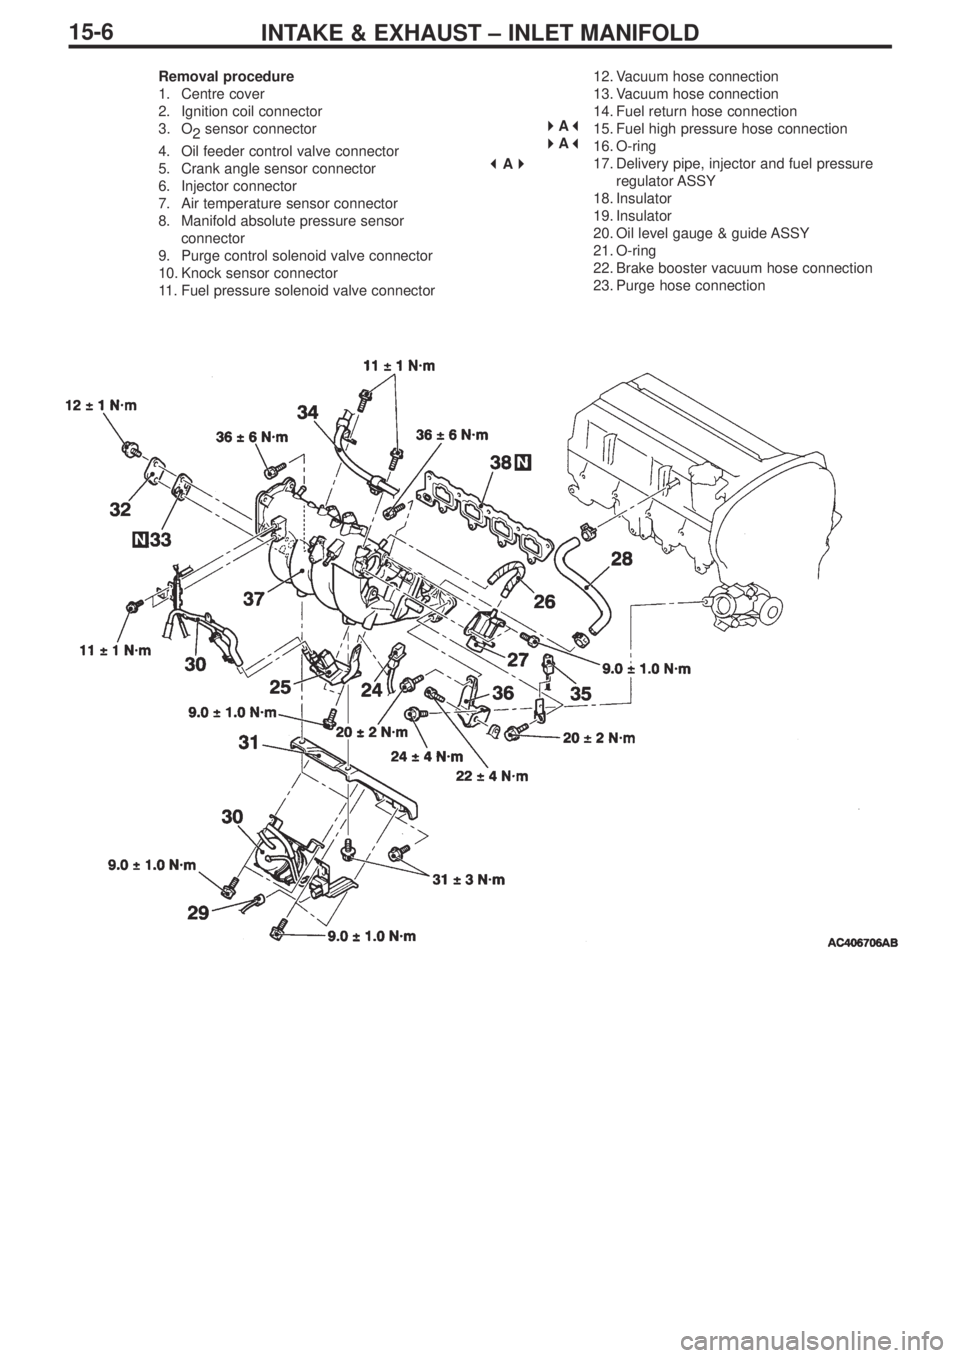 MITSUBISHI LANCER EVOLUTION IX 2005  Workshop Manual INTAKE & EXHAUST – INLET MANIFOLD15-6
Removal procedure
1. Centre cover
2.  Ignition coil connector
3. O
2sensor connector
4.  Oil feeder control valve connector
5.  Crank angle sensor connector
6. 